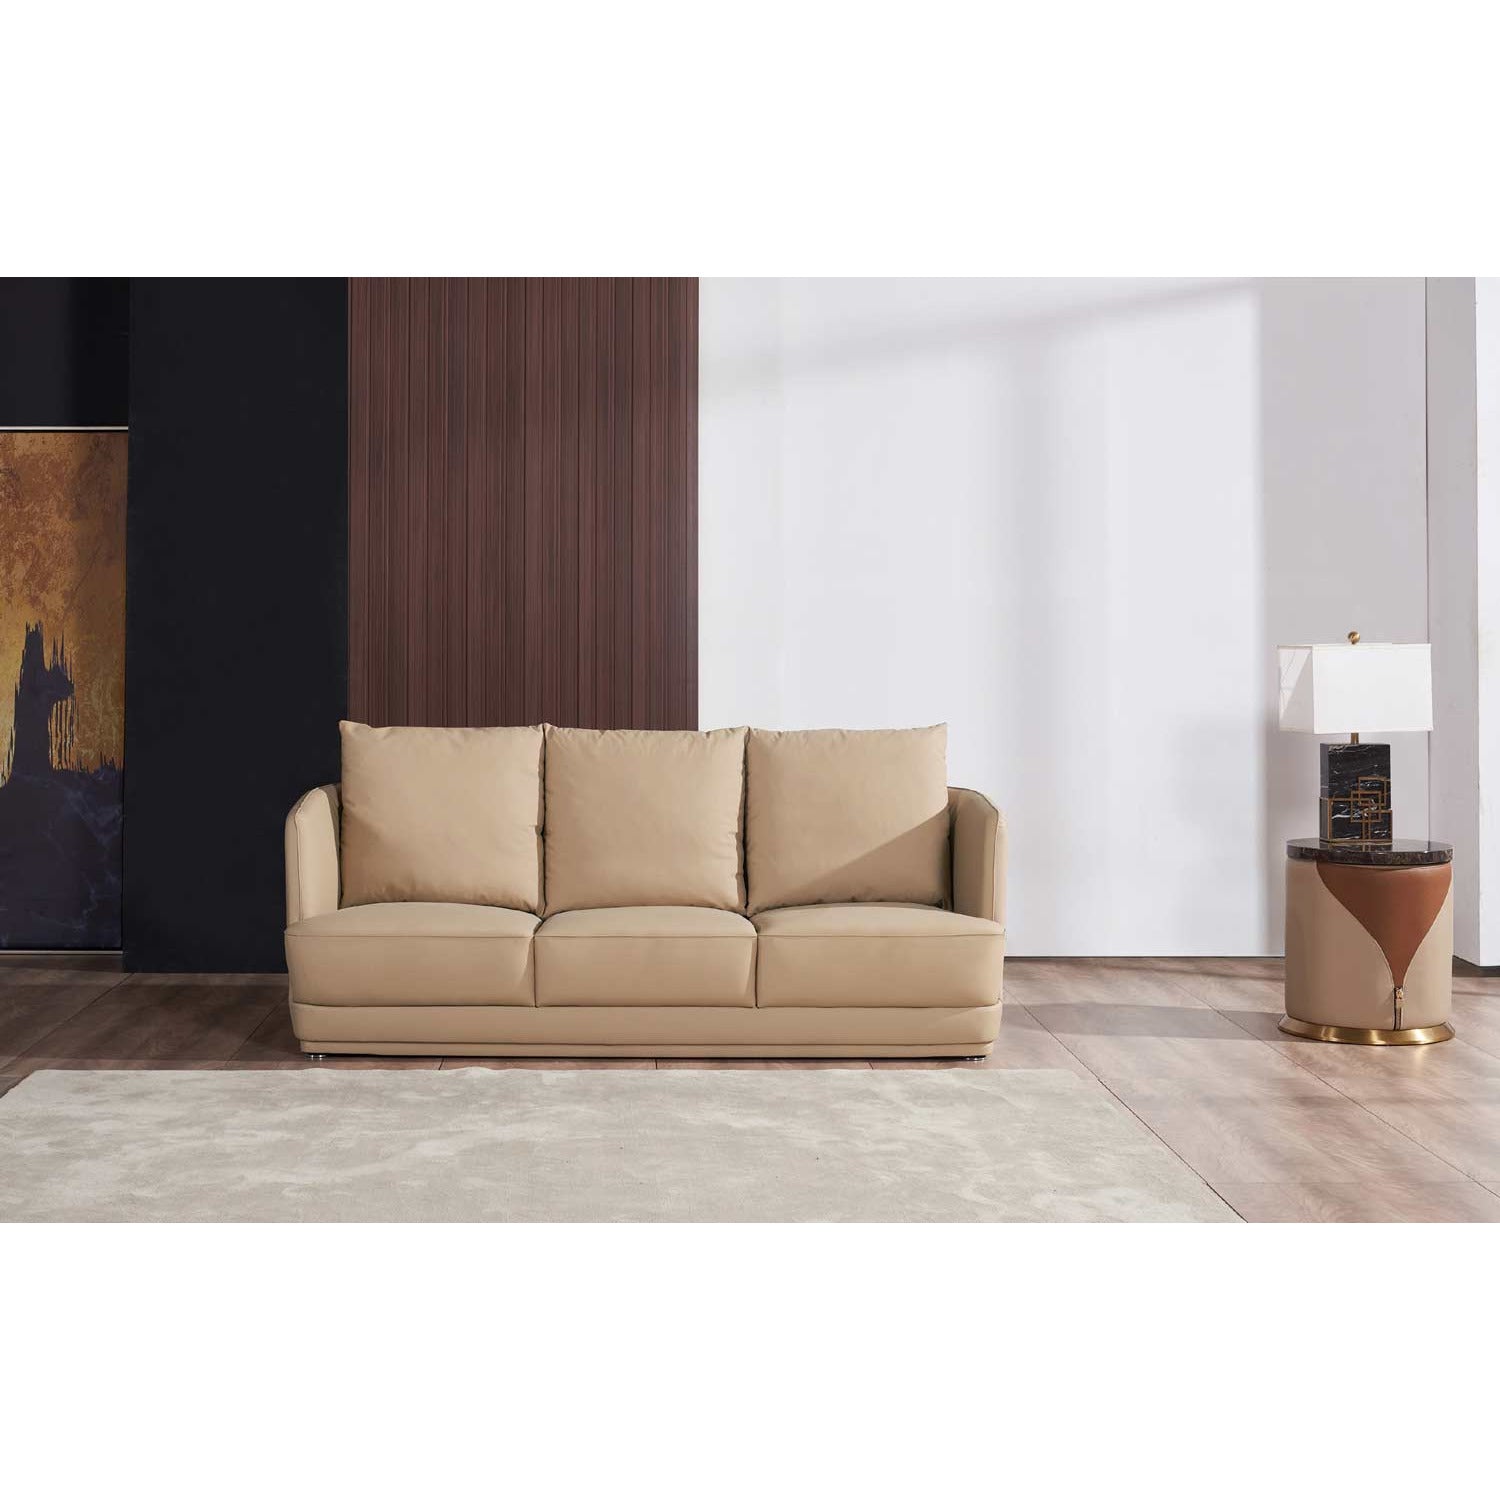 European Furniture - Glamour Sofa in Tan-Brown - 51617-S - New Star Living